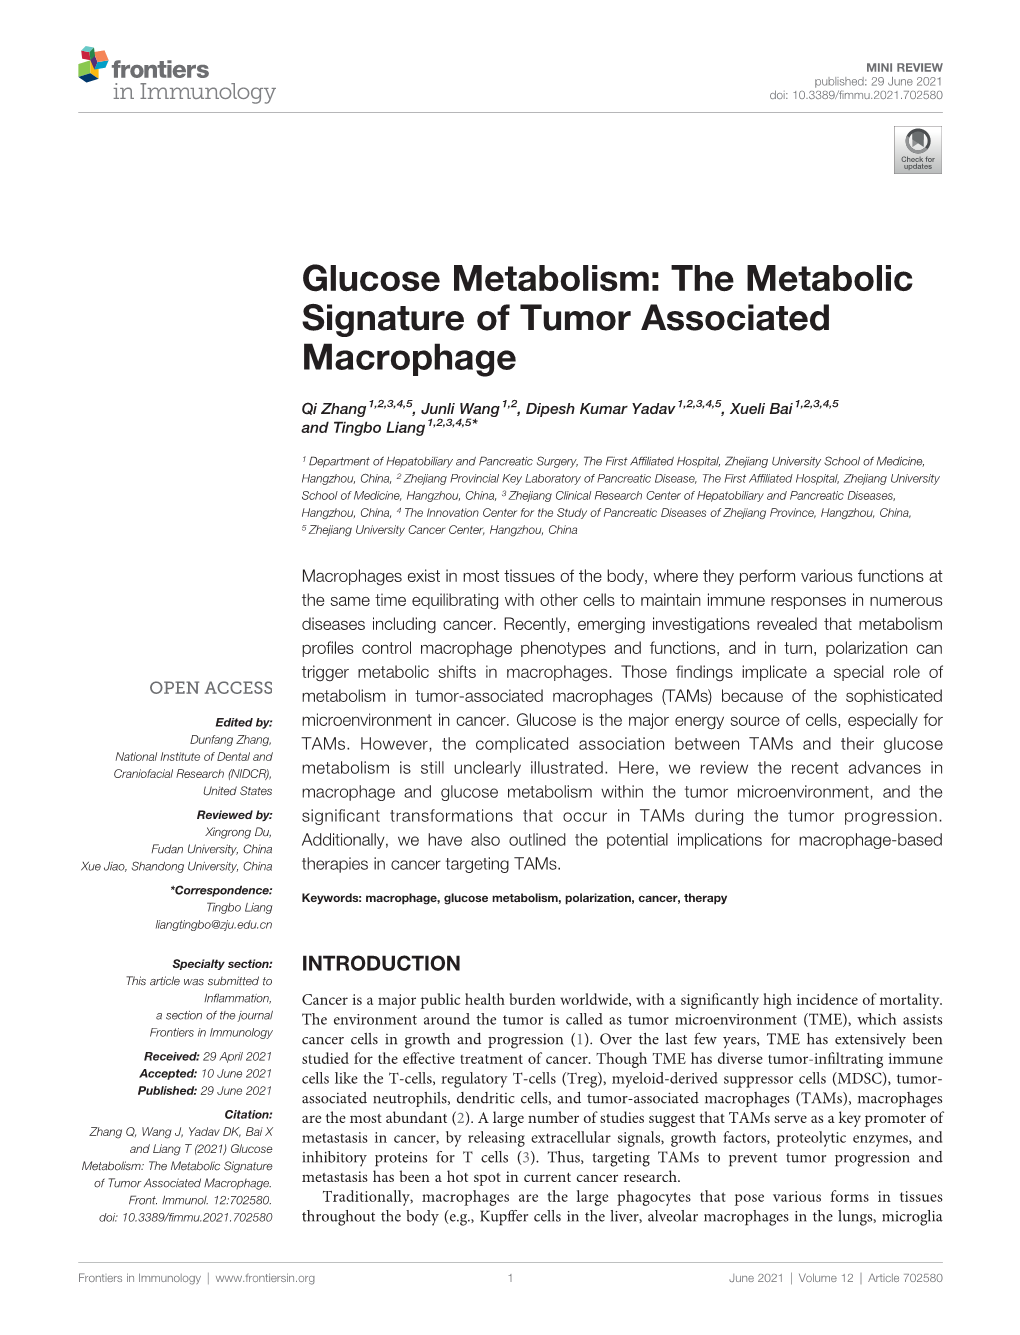 The Metabolic Signature of Tumor Associated Macrophage